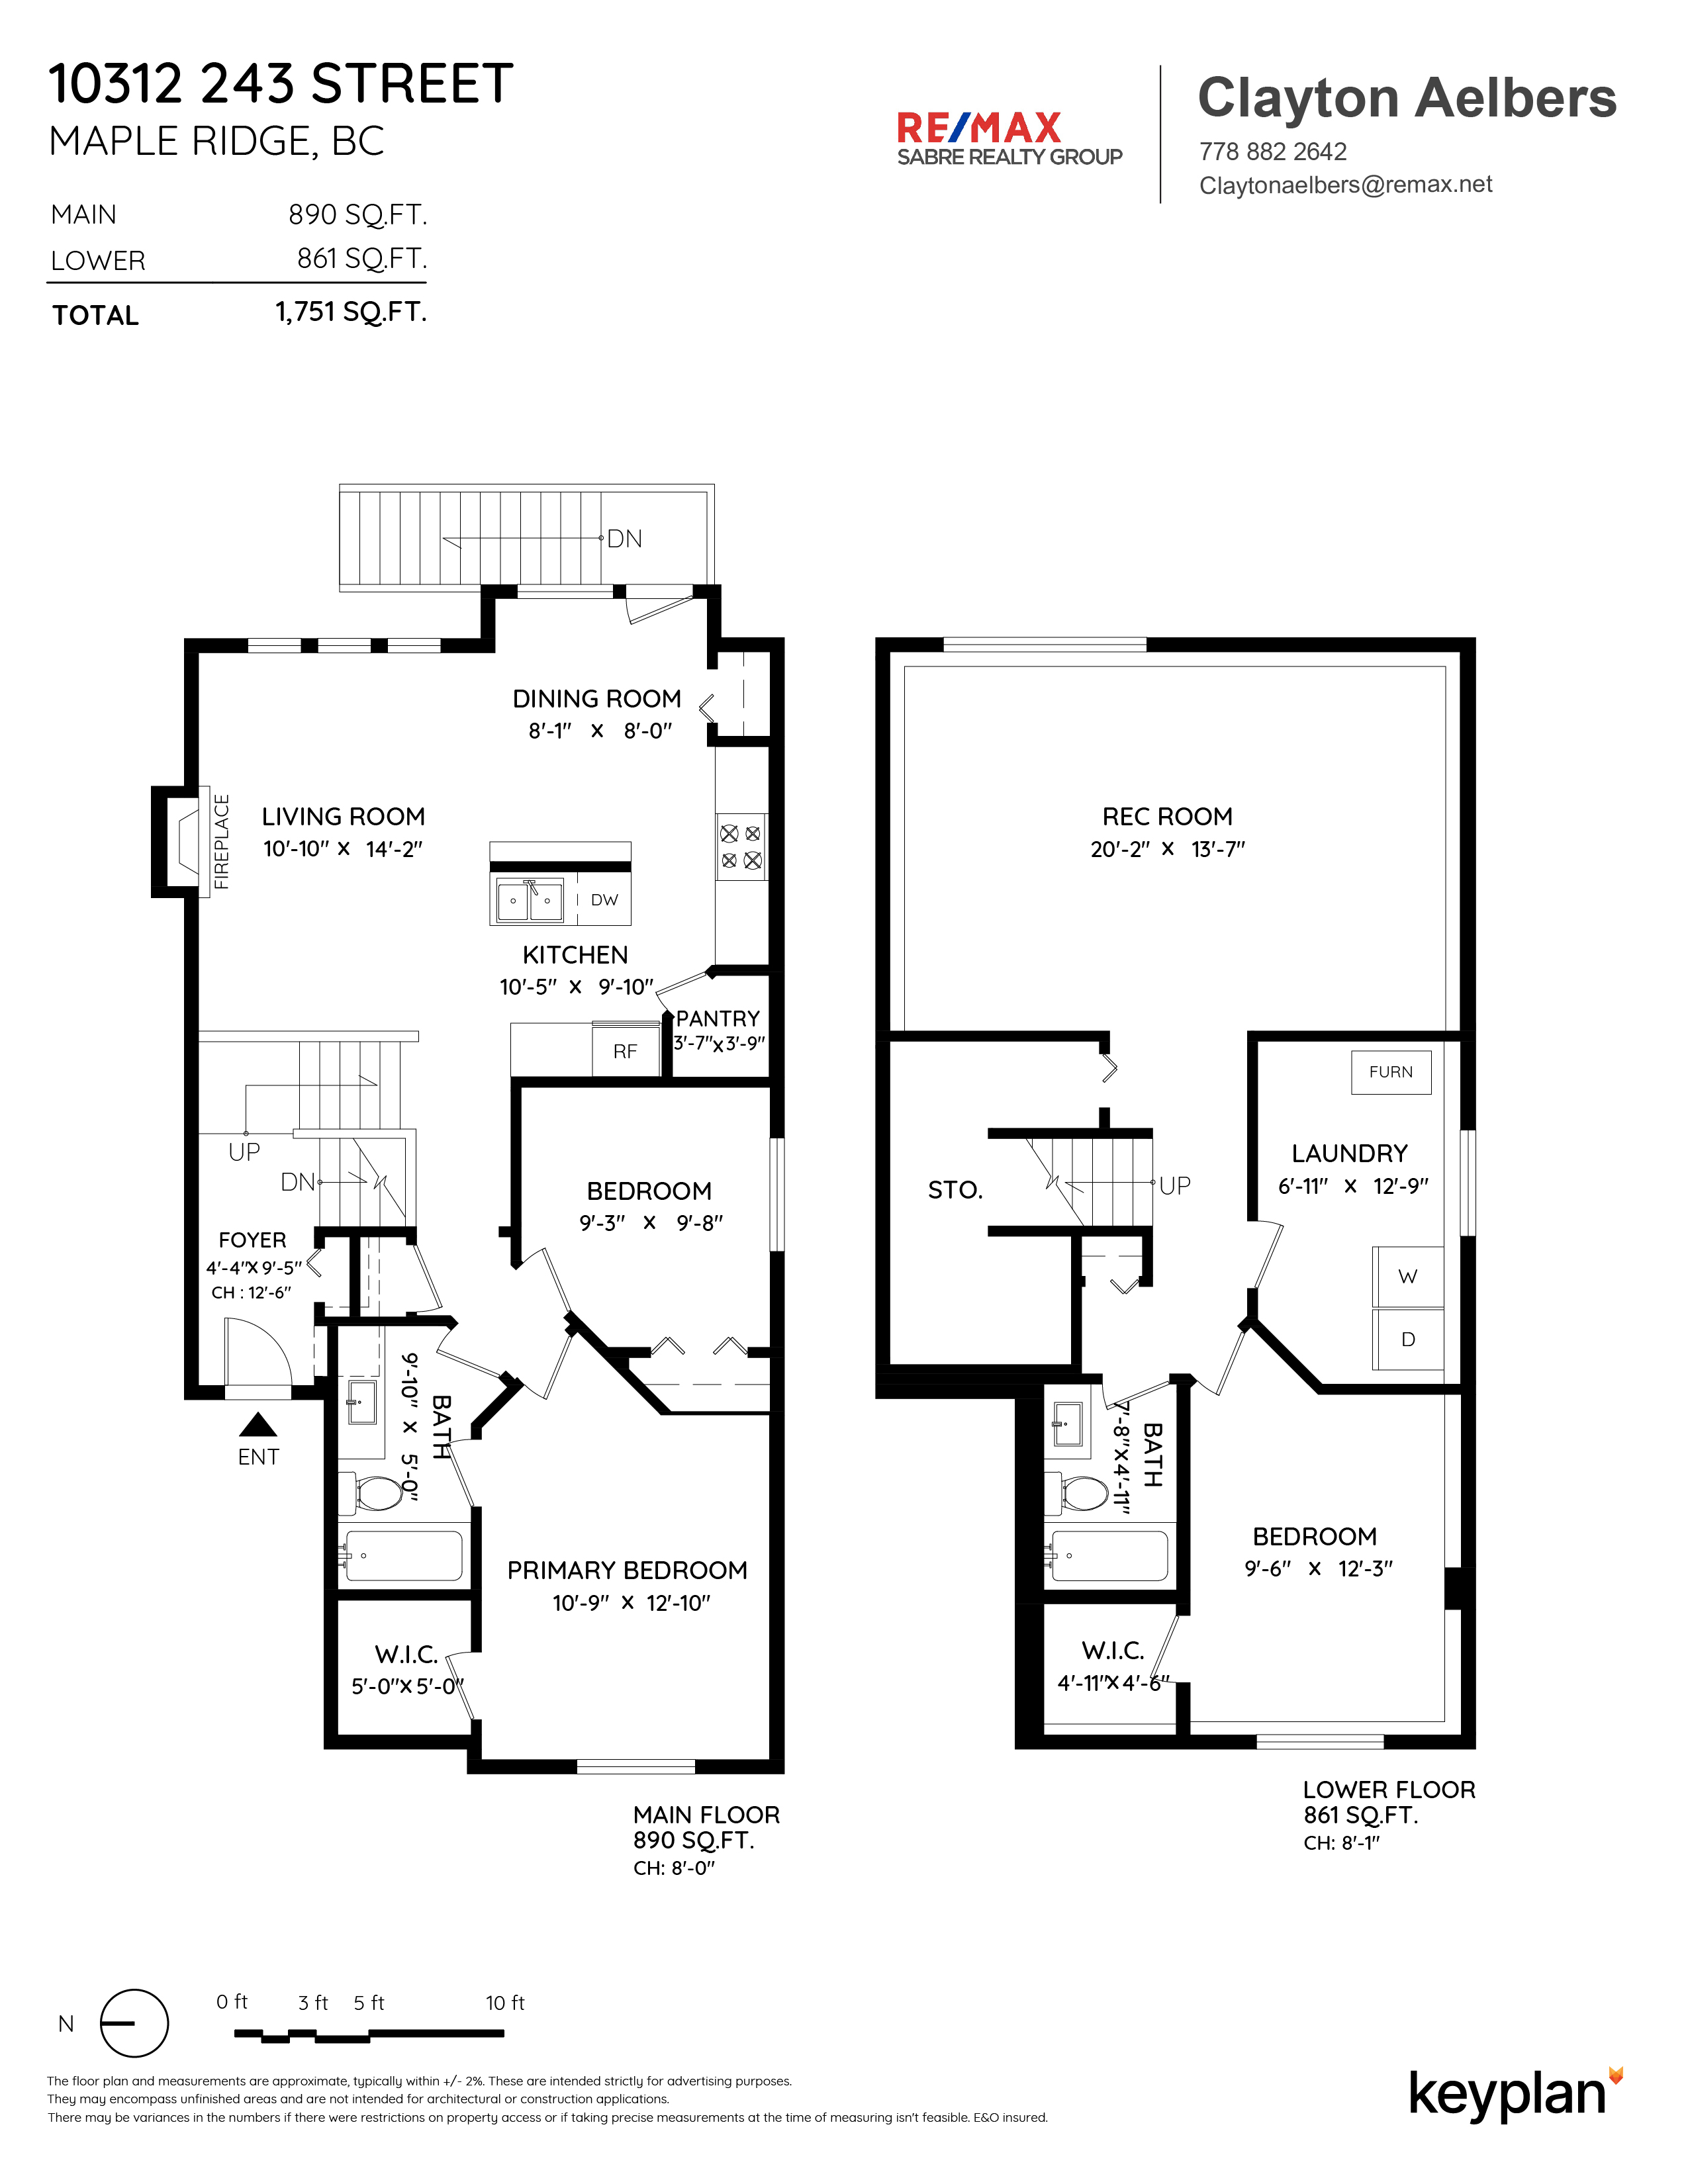 Clayton Aelbers - 10312 243 Street, Maple Ridge, BC, Canada | Floor Plan 1